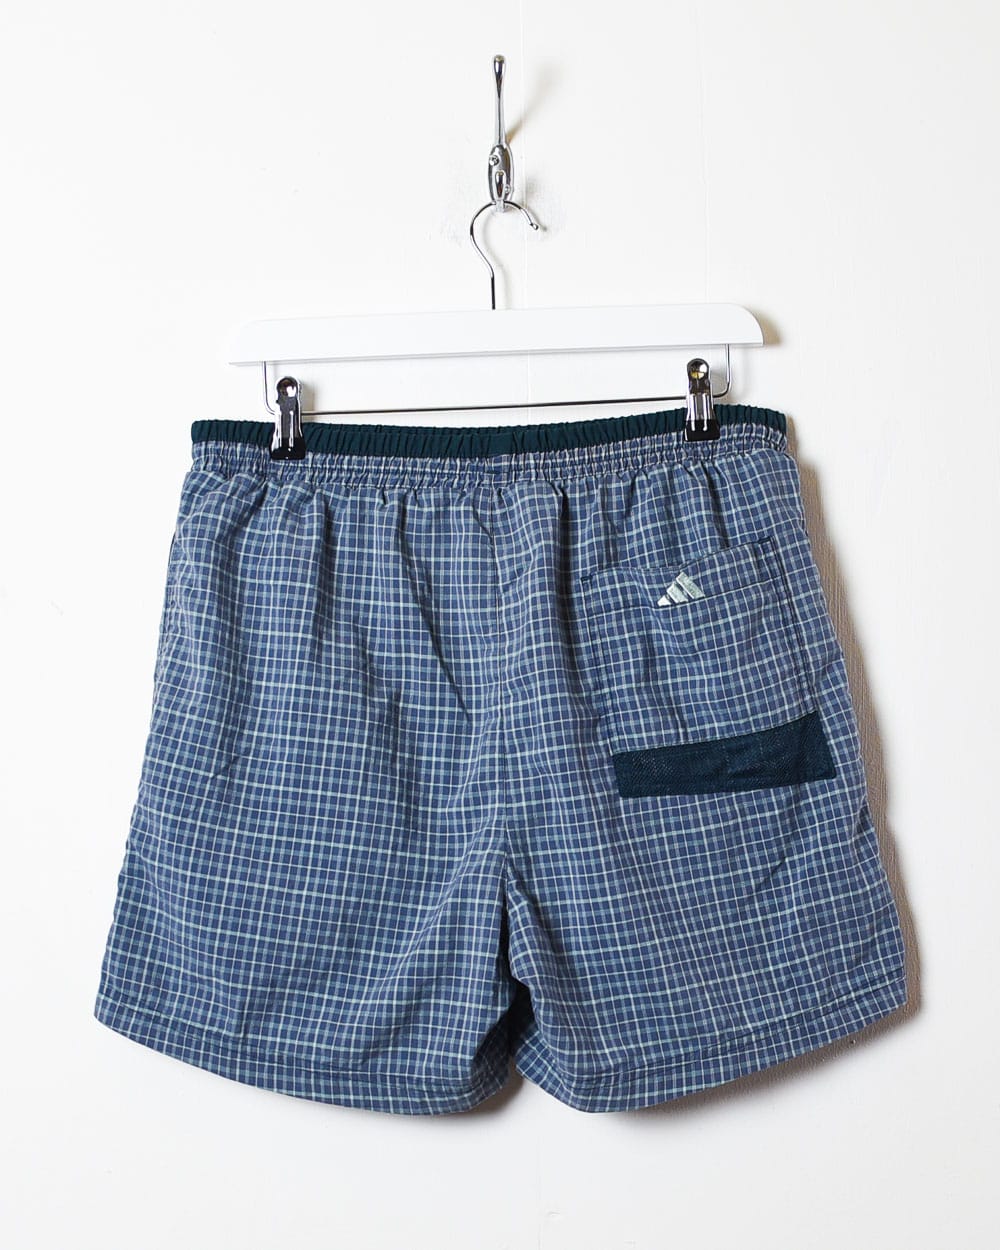 Navy Adidas Checked Mesh Shorts - Medium